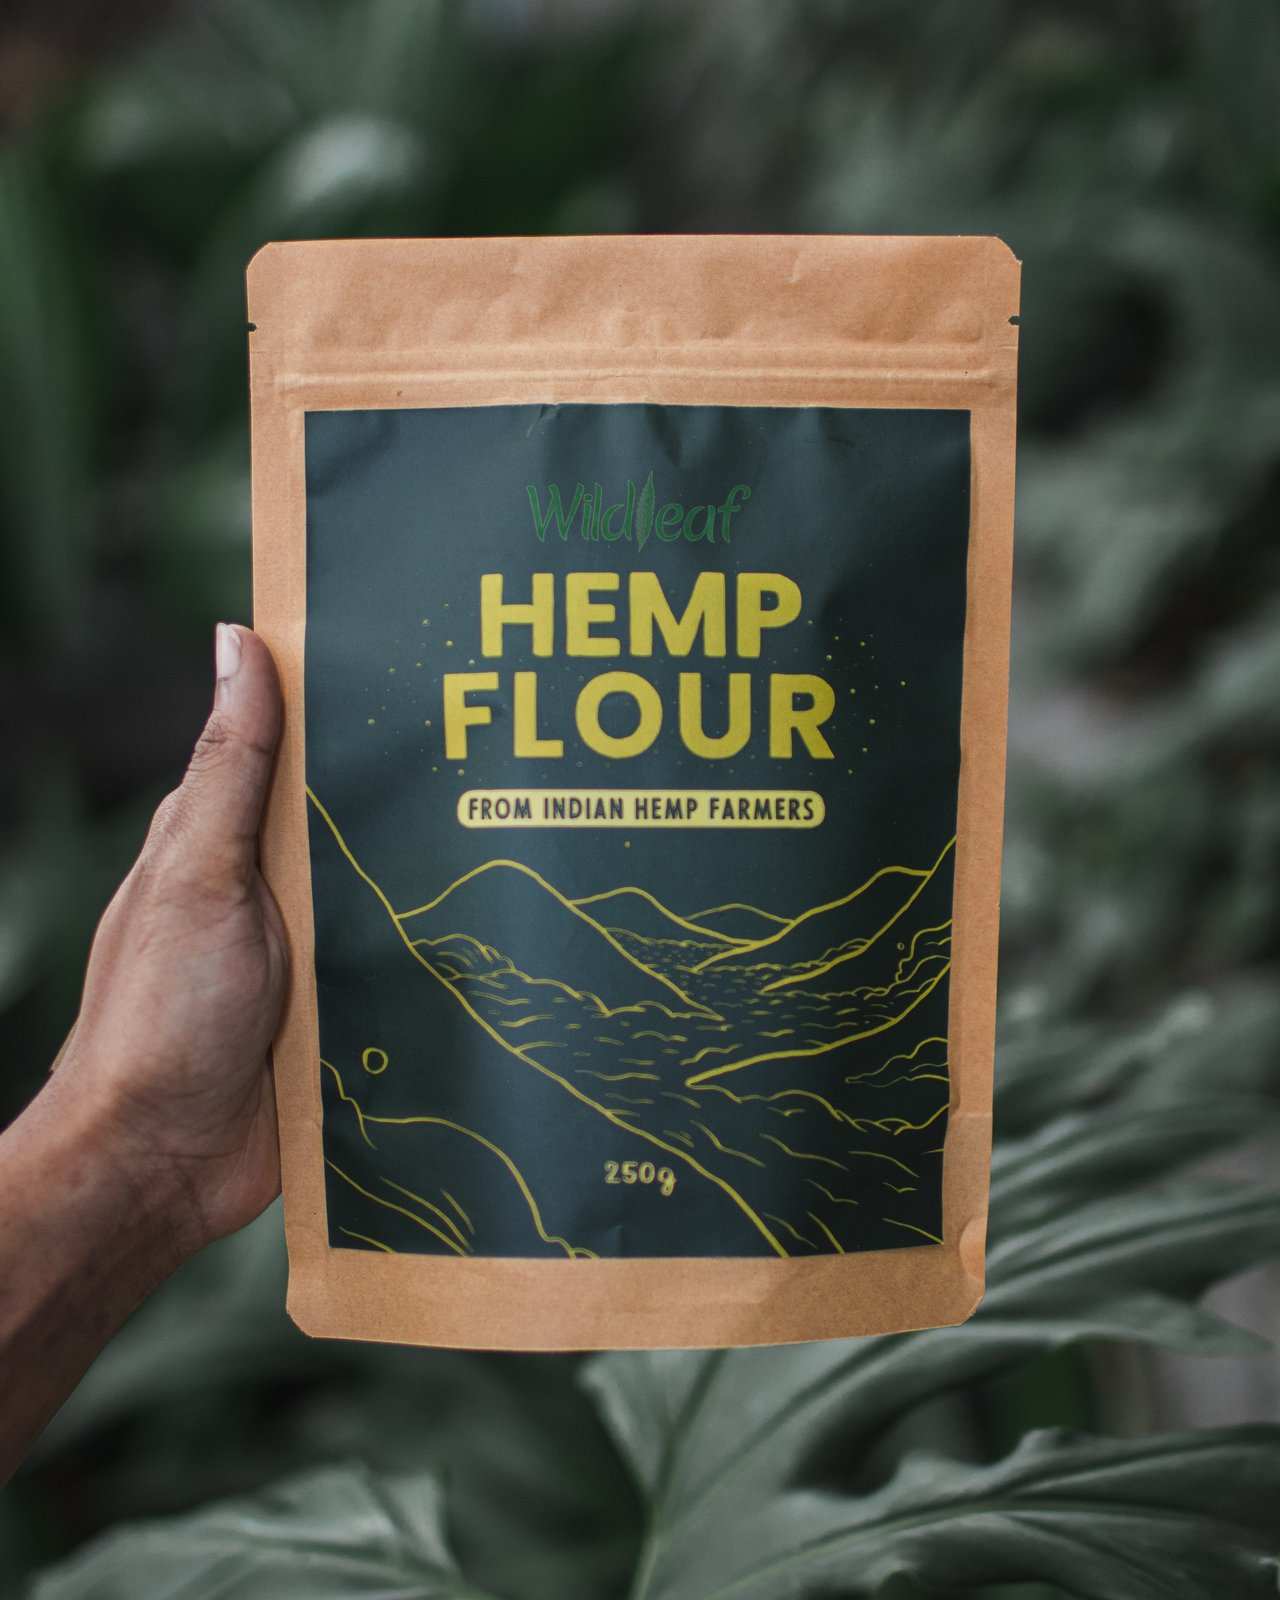 Wild Leaf Hemp Flour (250gm - 500gm) - CBD Store India